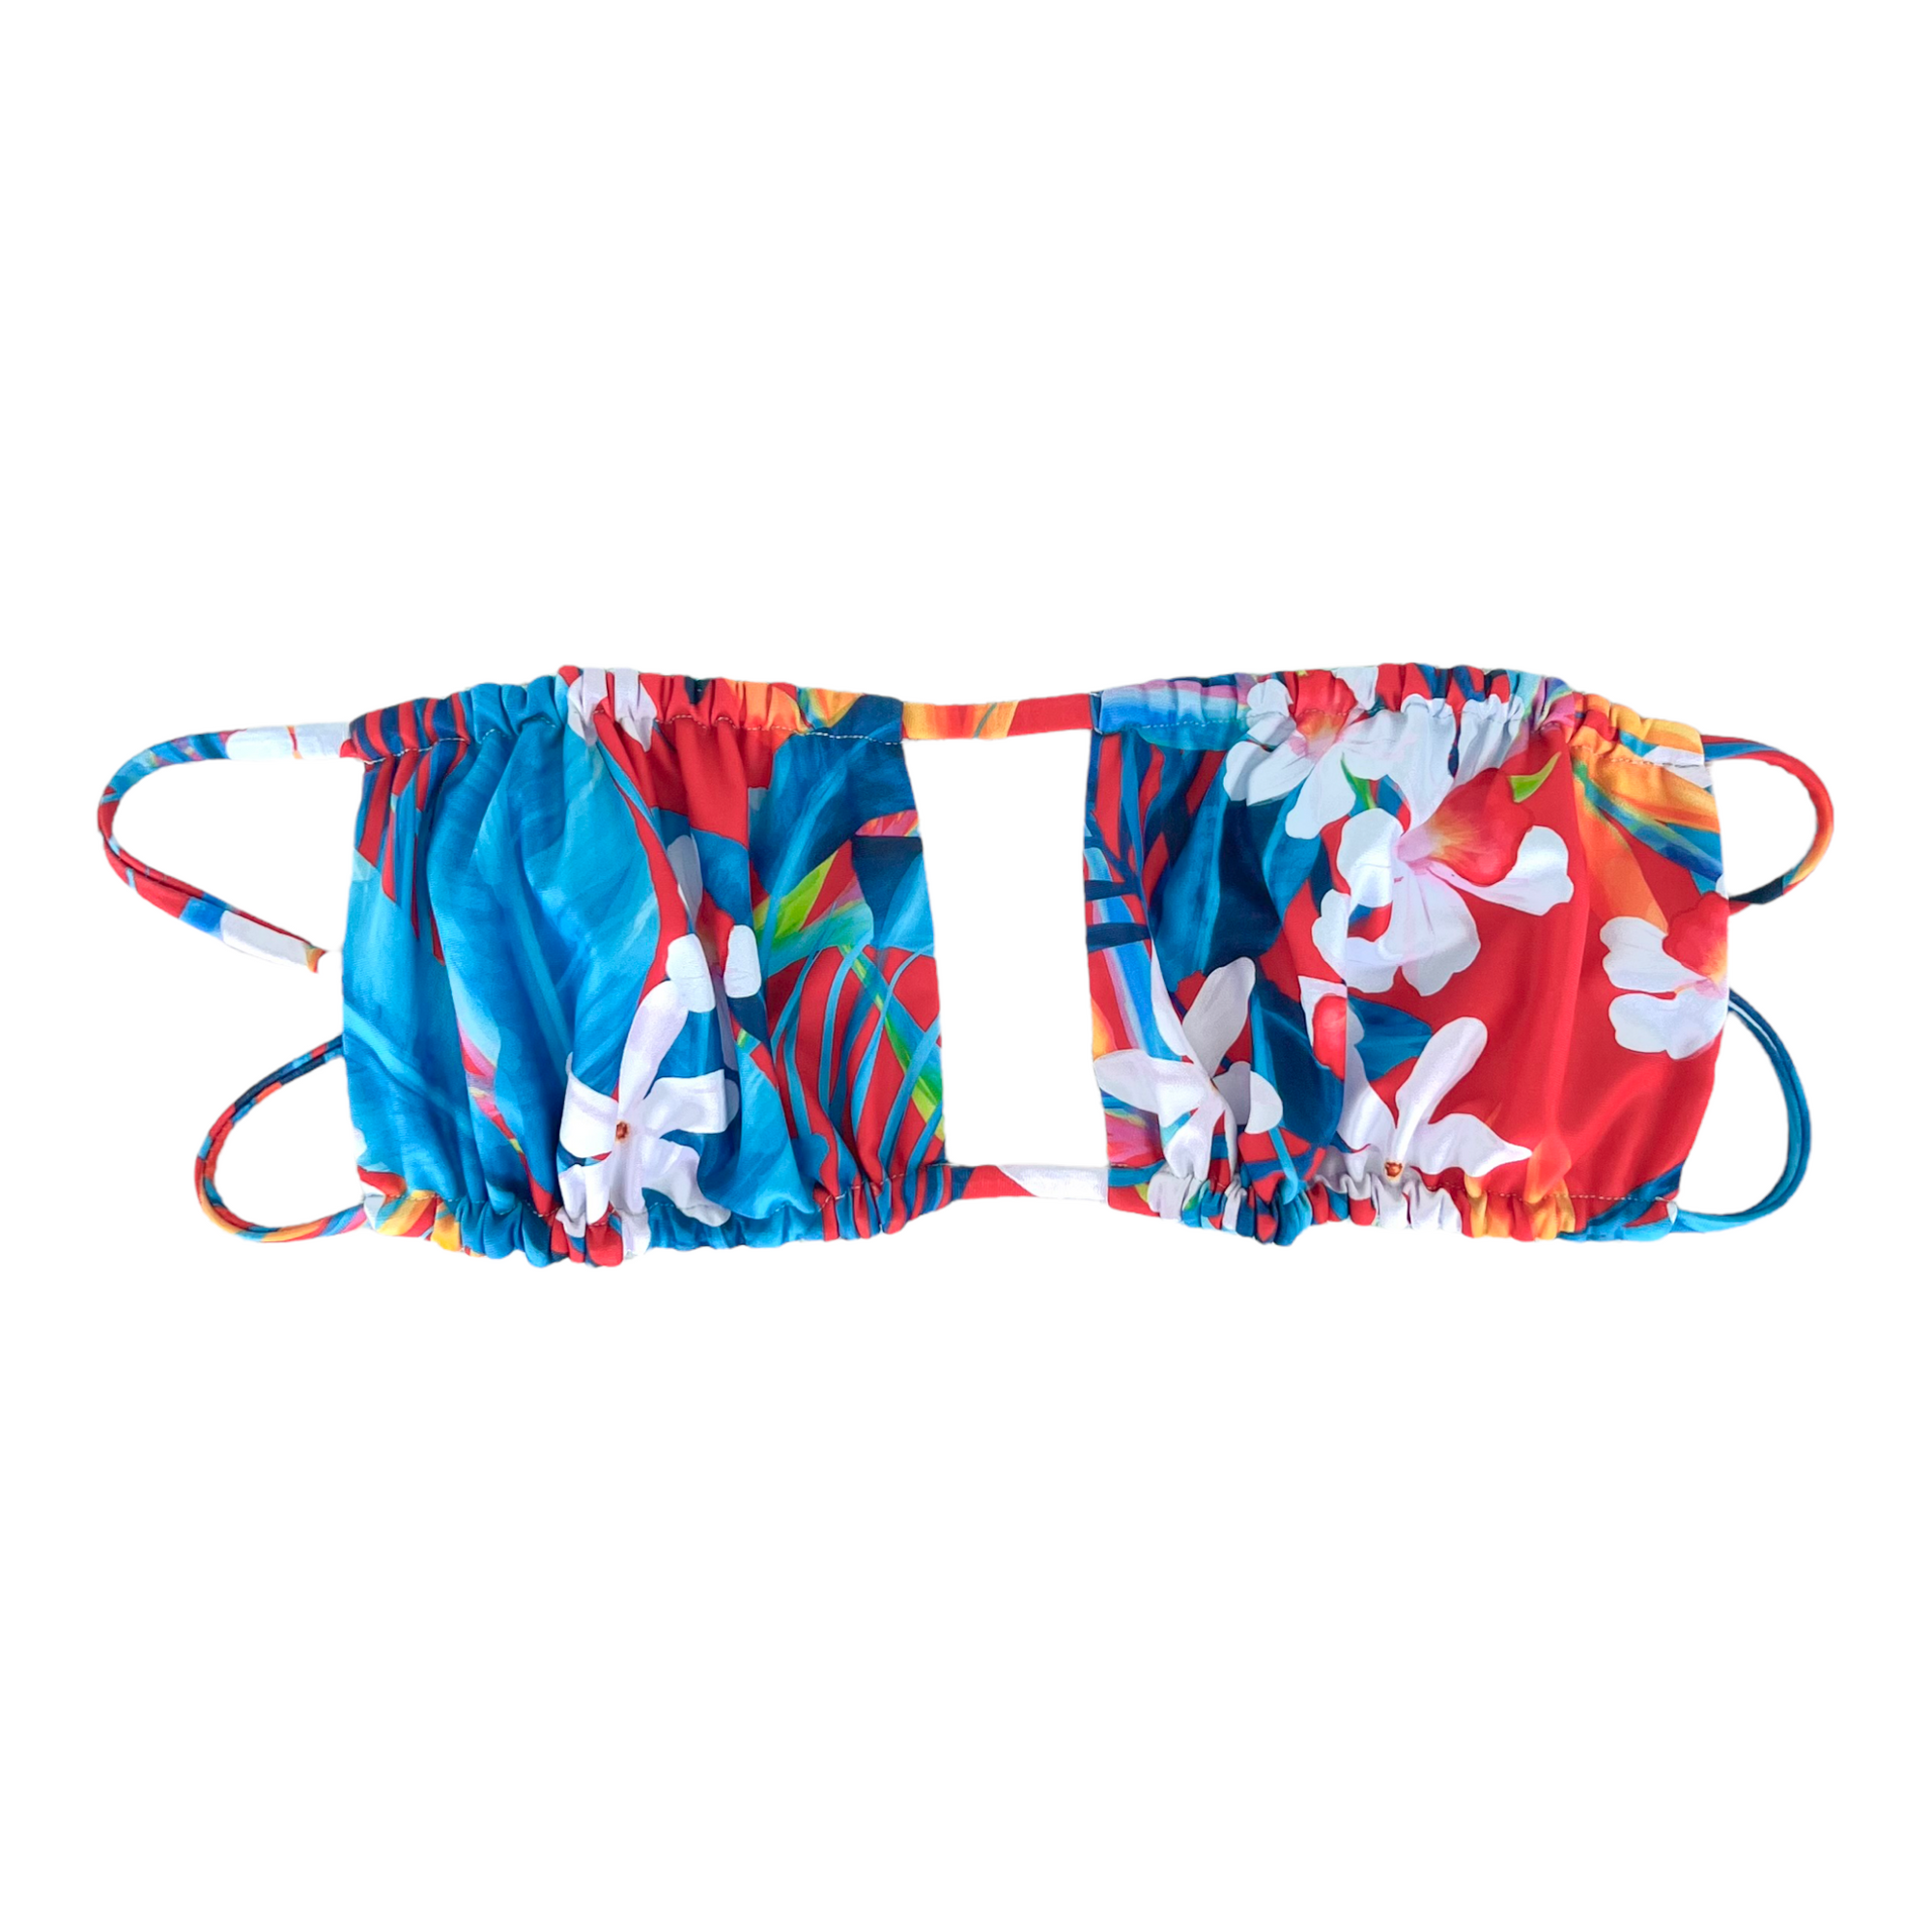 Bikini Top- Bandeau Bikini- Delilah Bandeau Bikini Top in Sunrise and  Sunset in St. Lucia print - Goddess Swimwear